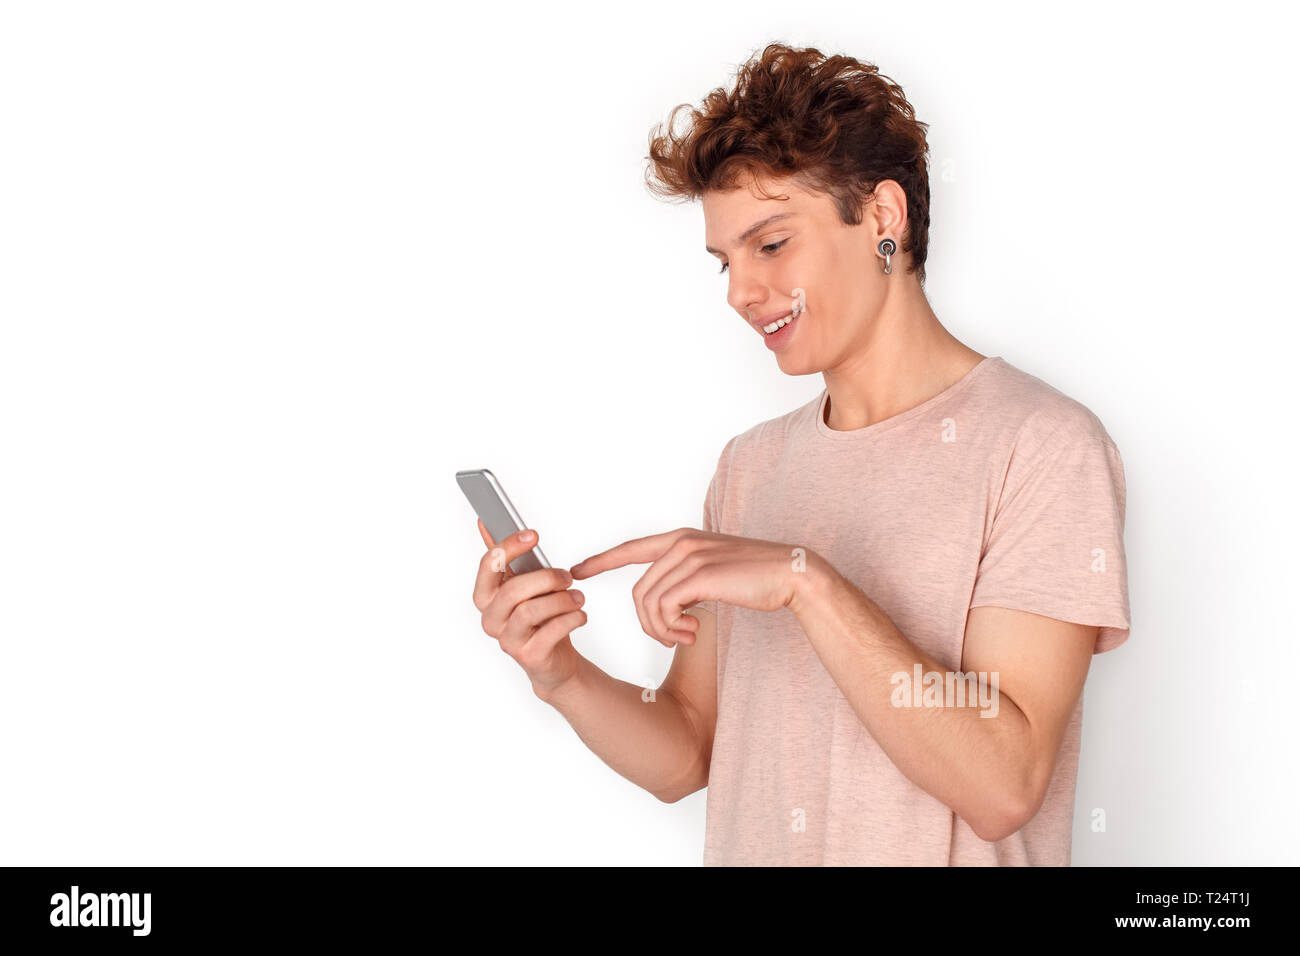 Teenager boy wearing earrings studio standing isolated on white wall browsing internet on smartphone smiling joyful side view Stock Photo